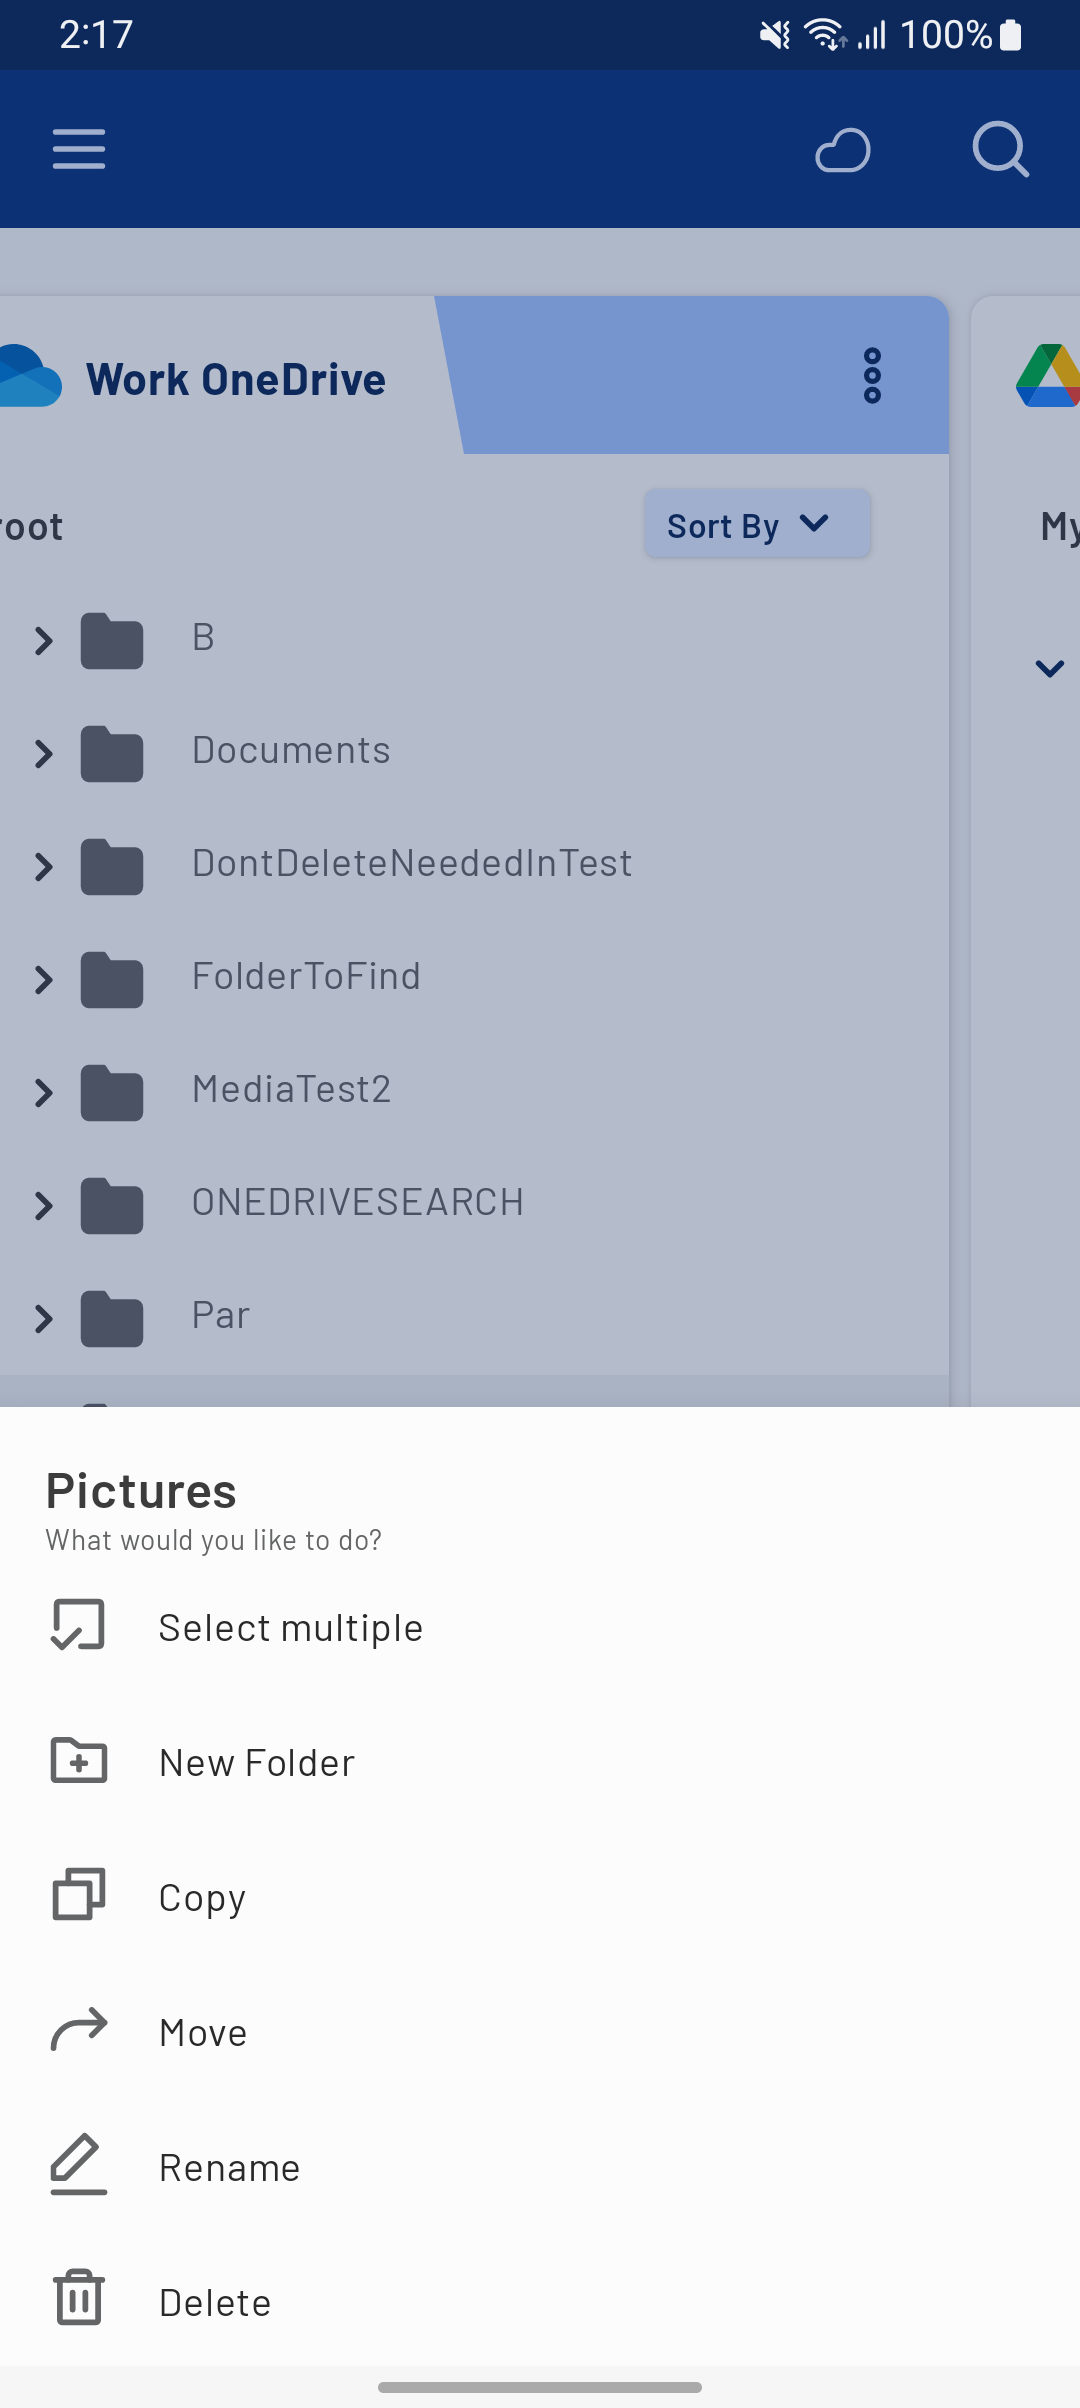 Screenshot of mementō on mobile phone action menu when one file item is selected